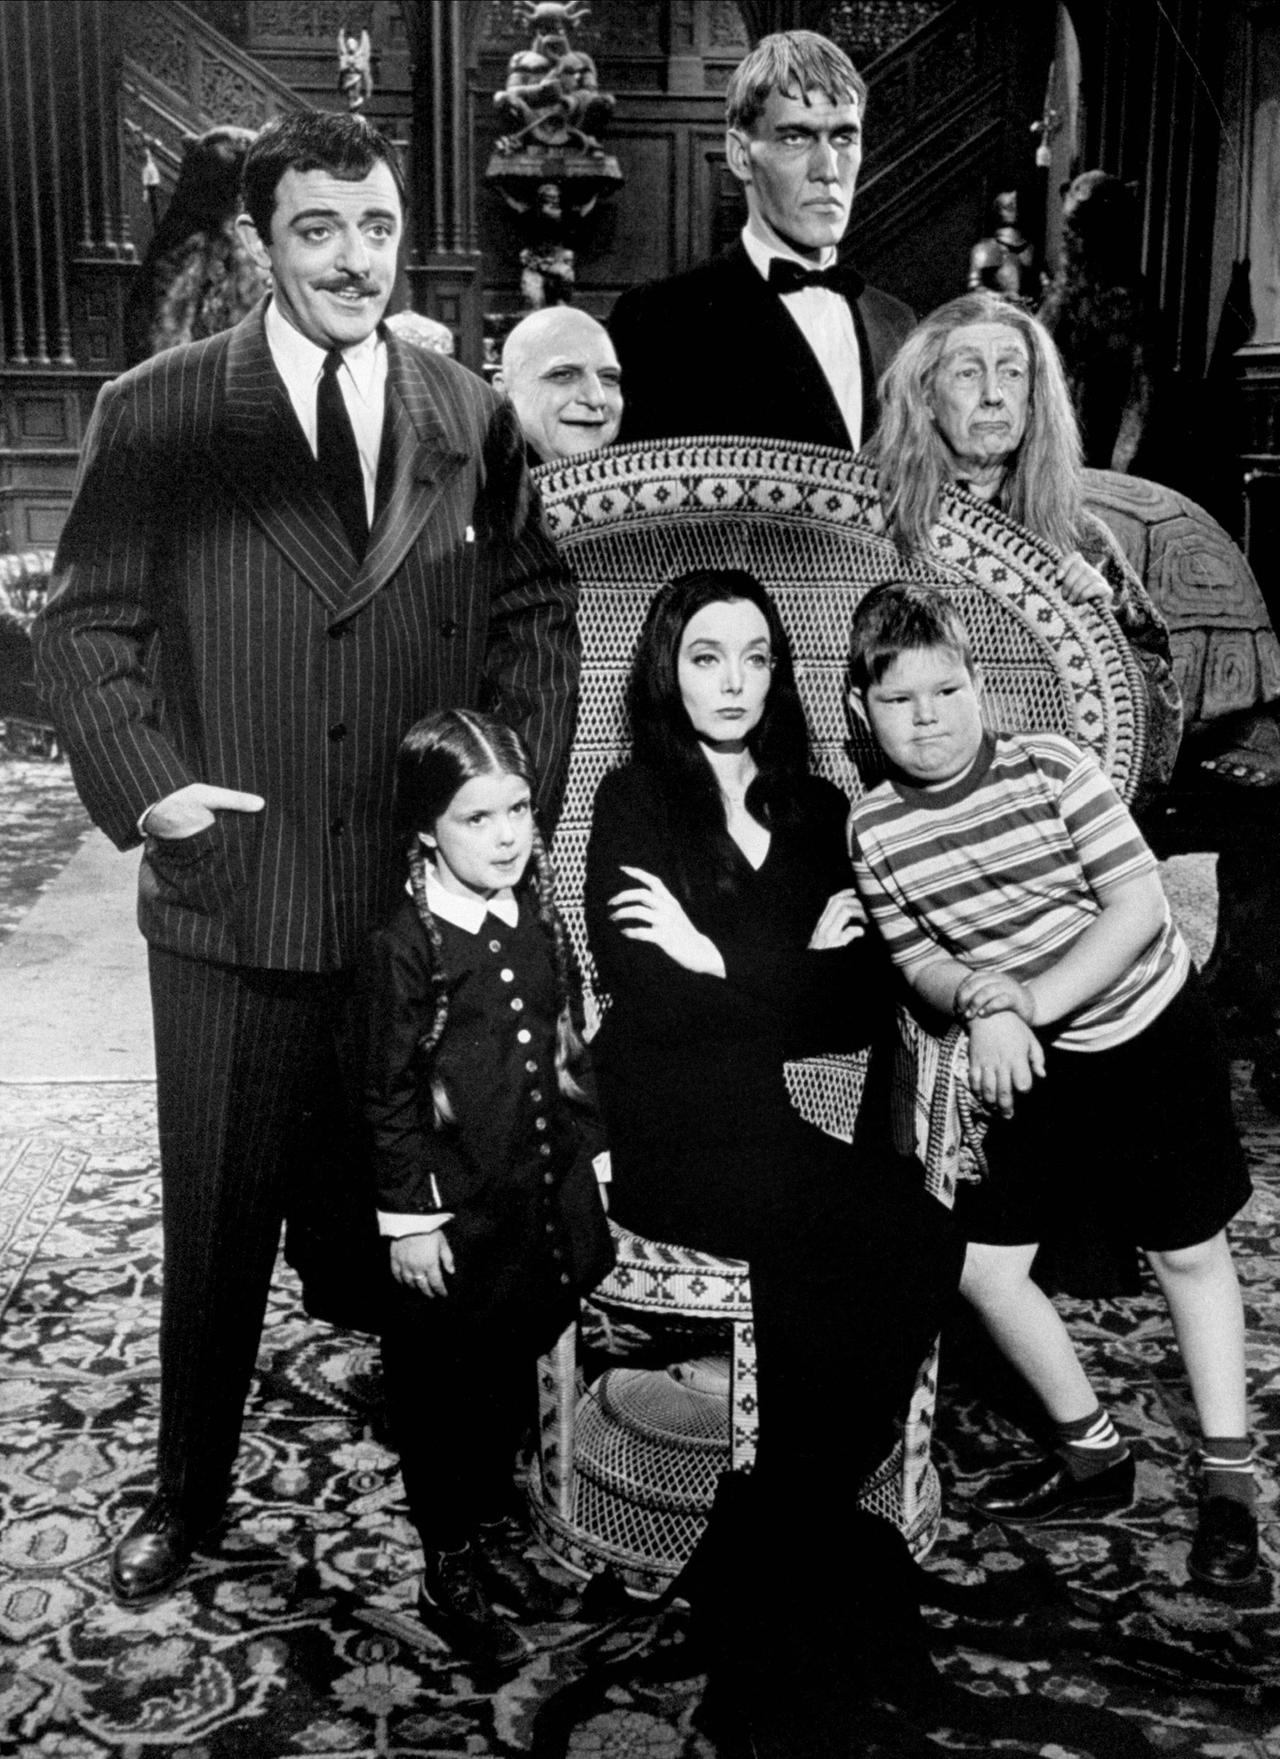 The Addams Family (1964), mit Lisa Loring alias Wednesday Addams